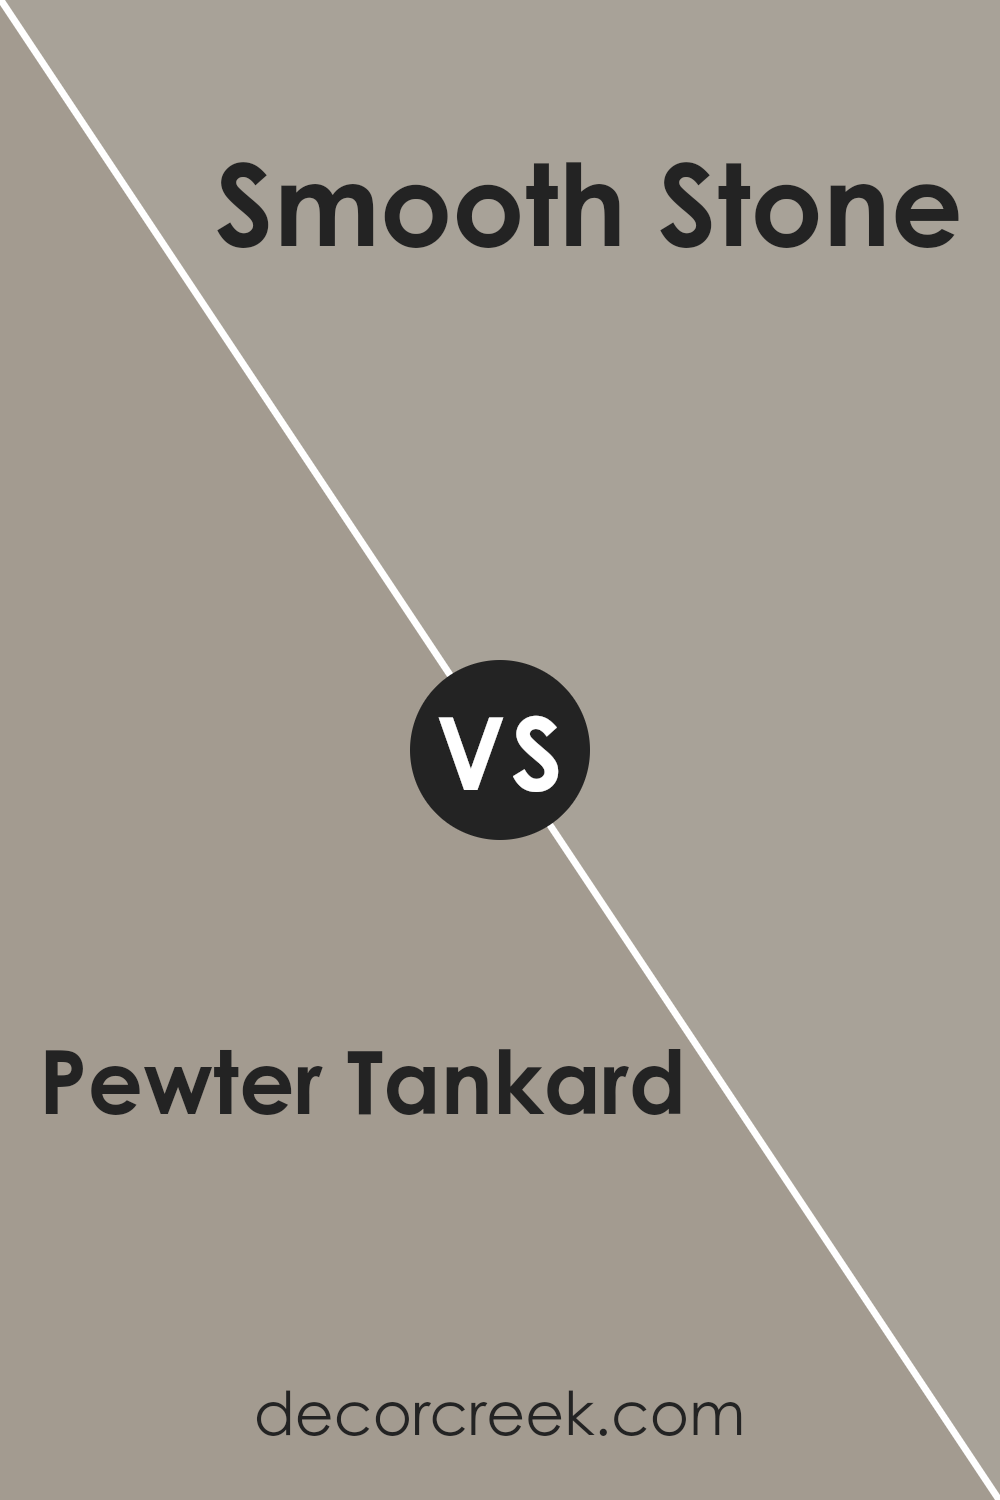 pewter_tankard_sw_0023_vs_smooth_stone_sw_9568